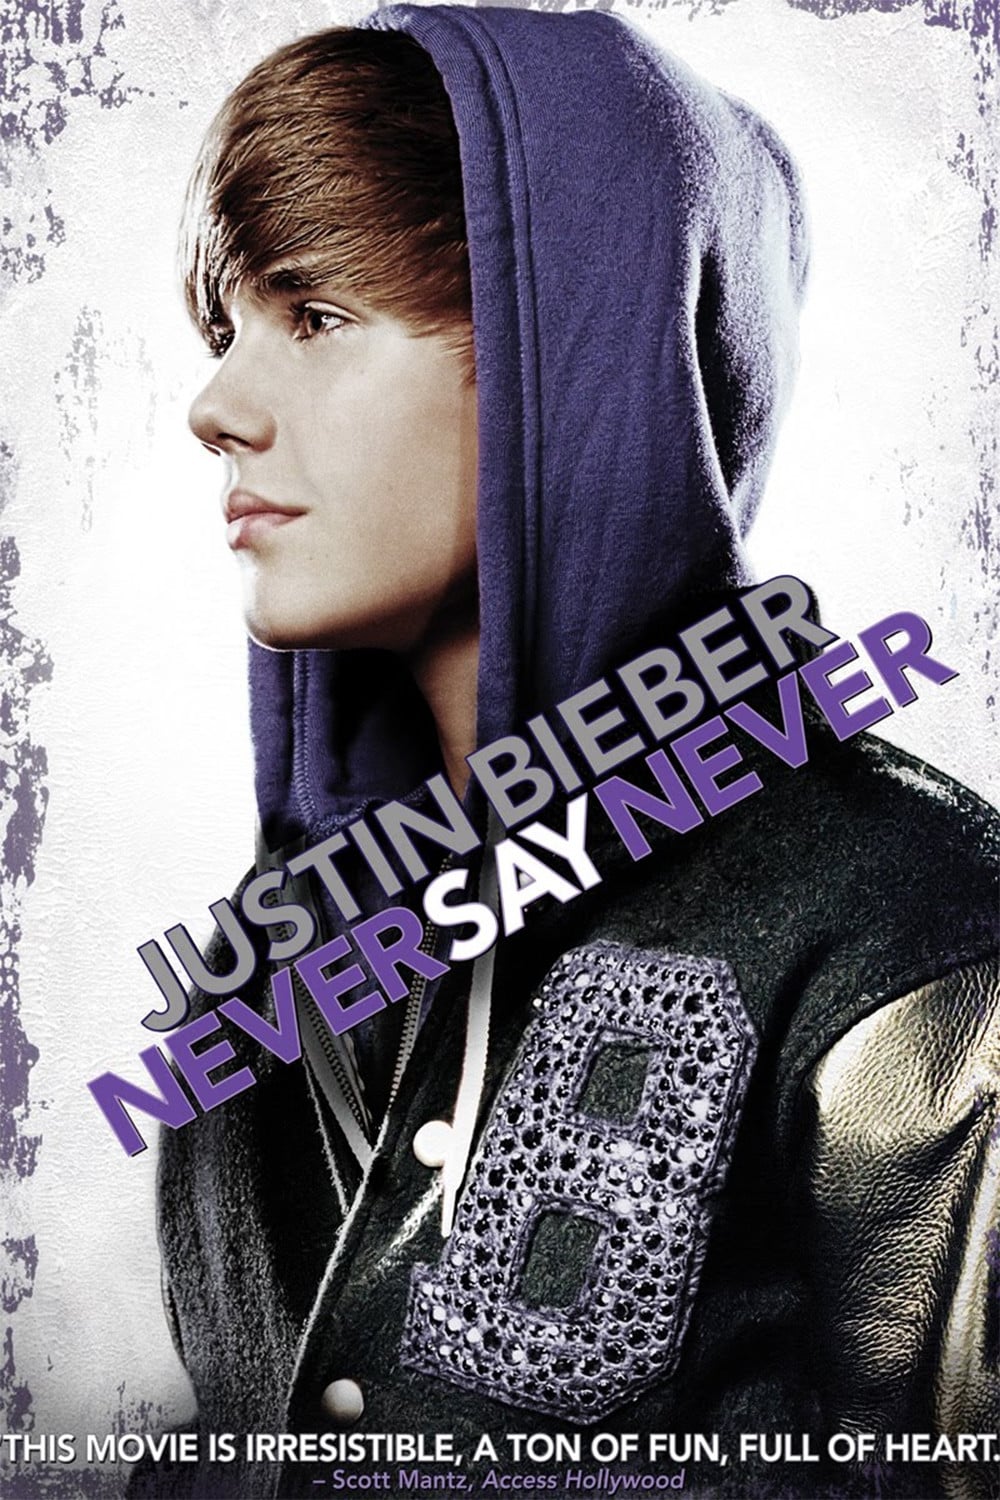 Plakat von "Justin Bieber: Never Say Never"